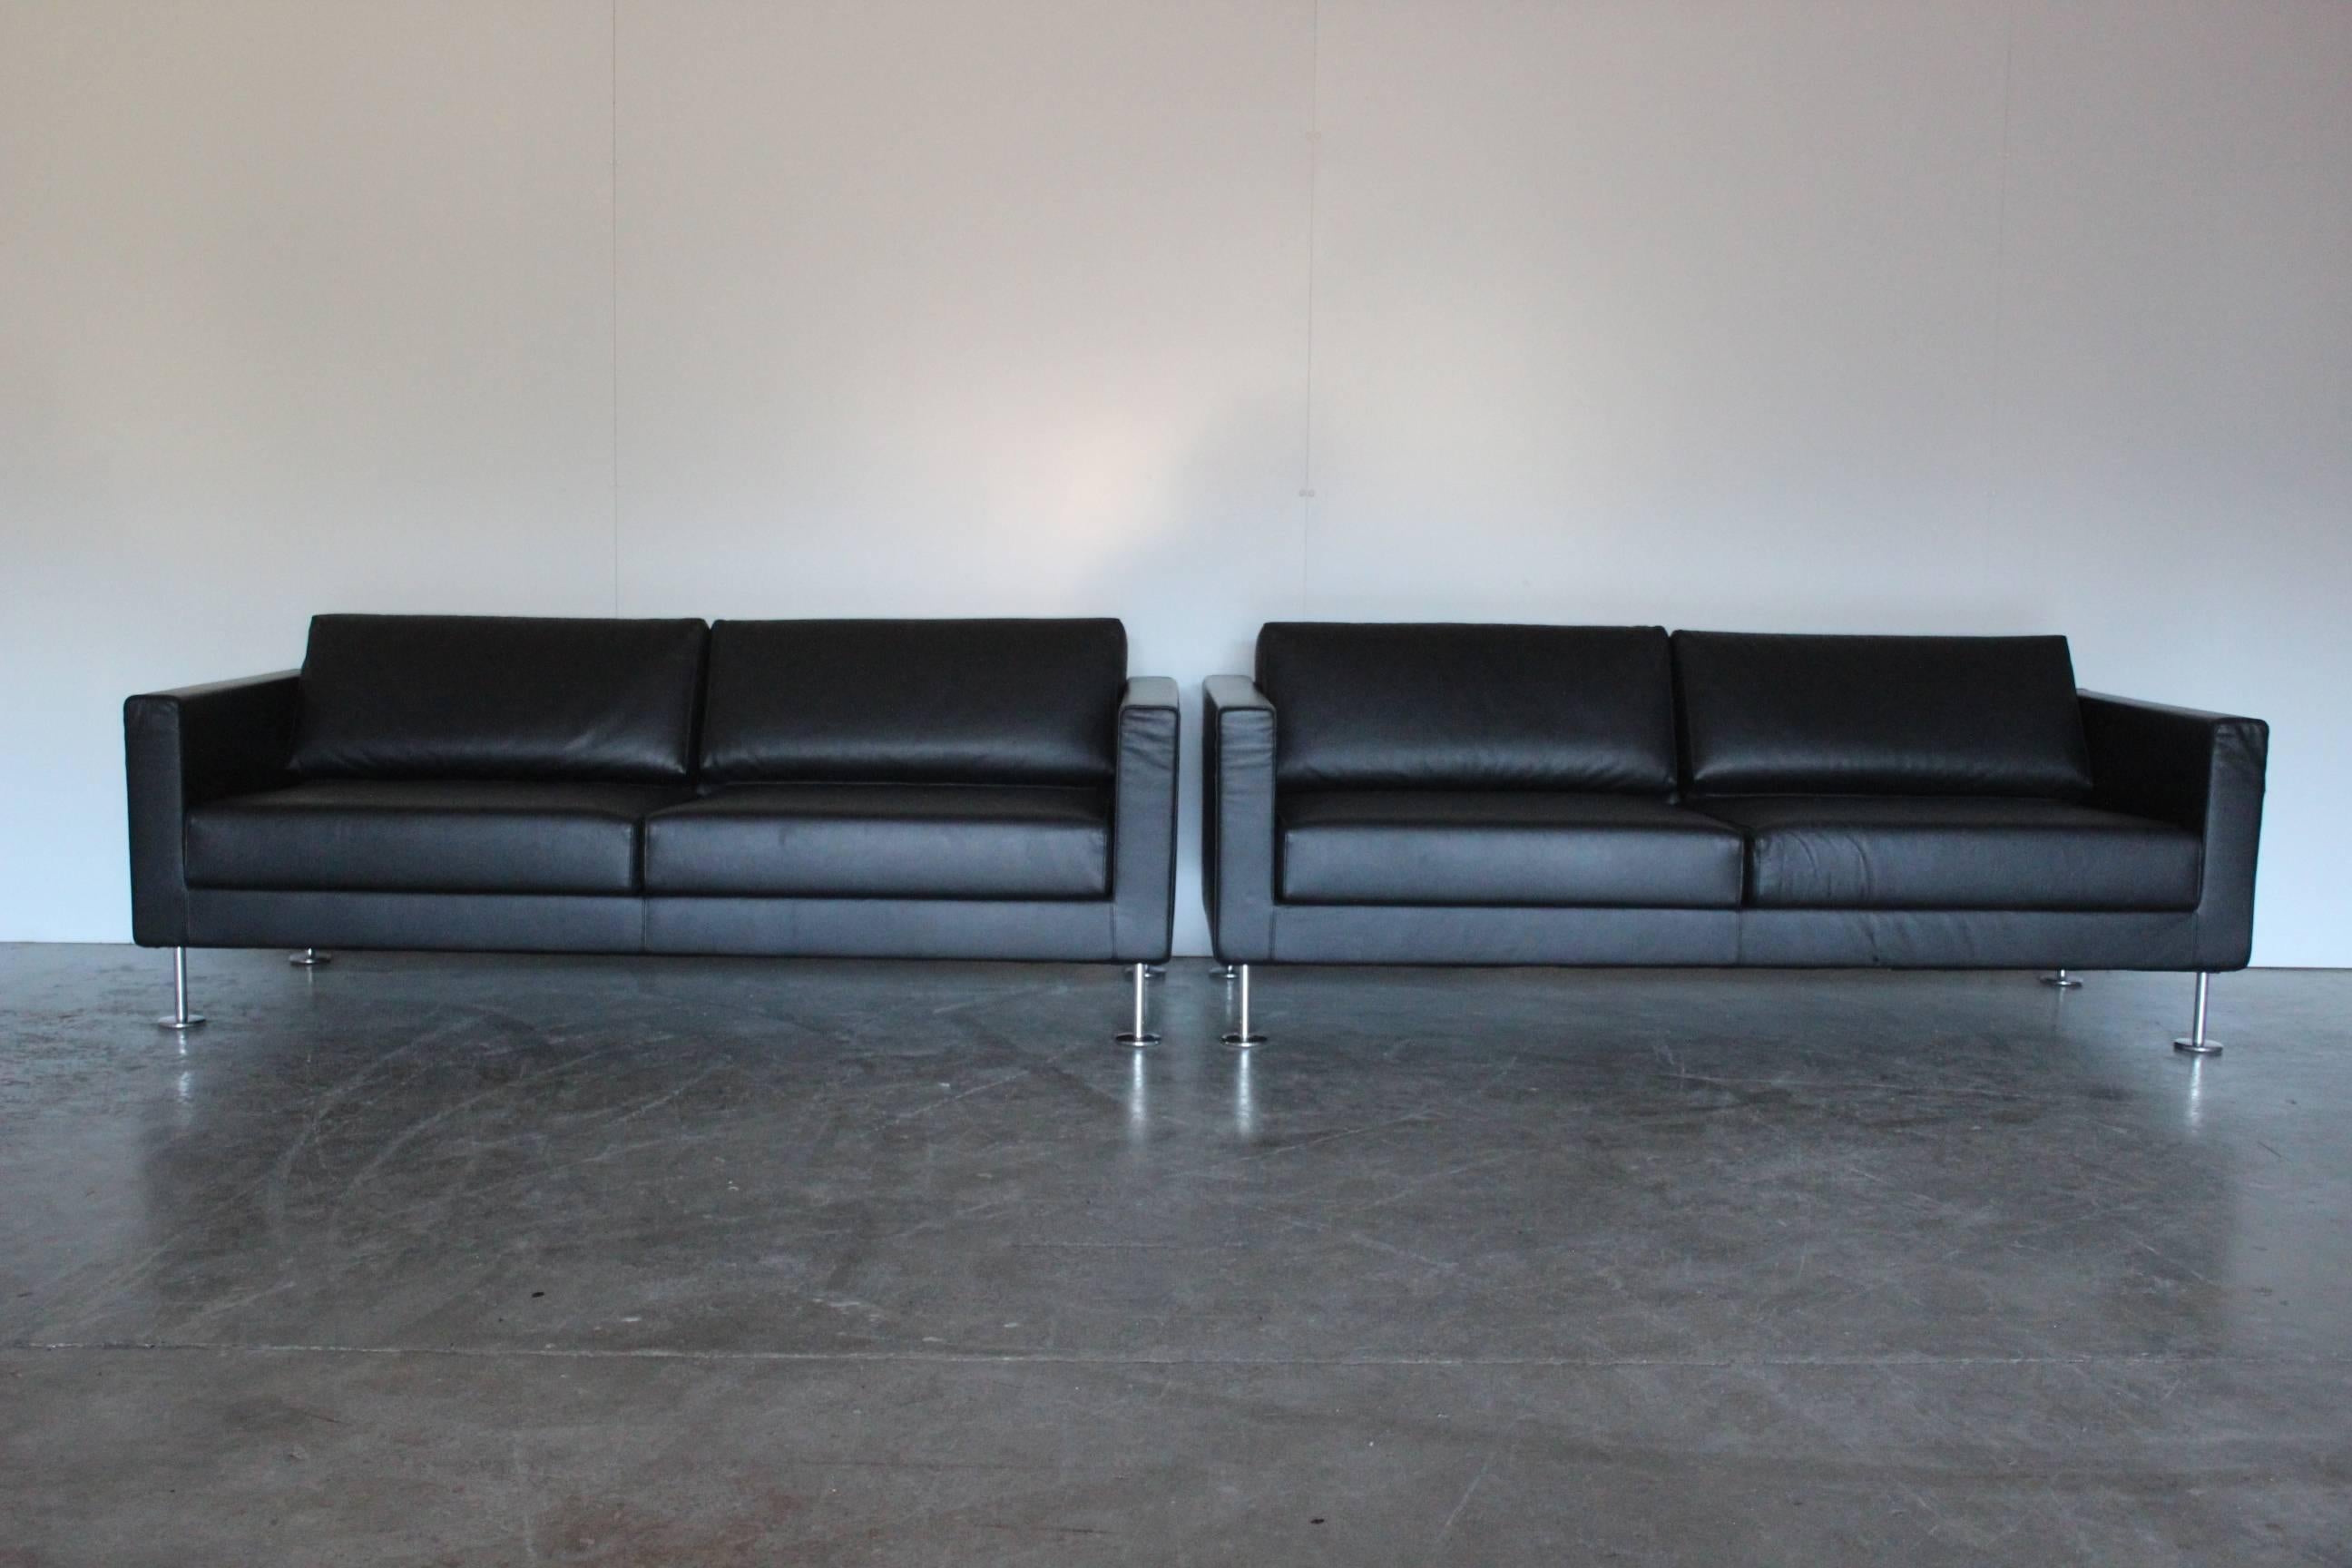 Vitra “Park” Three-Seat Sofa in Jet Black Leather by Jasper Morrison 2